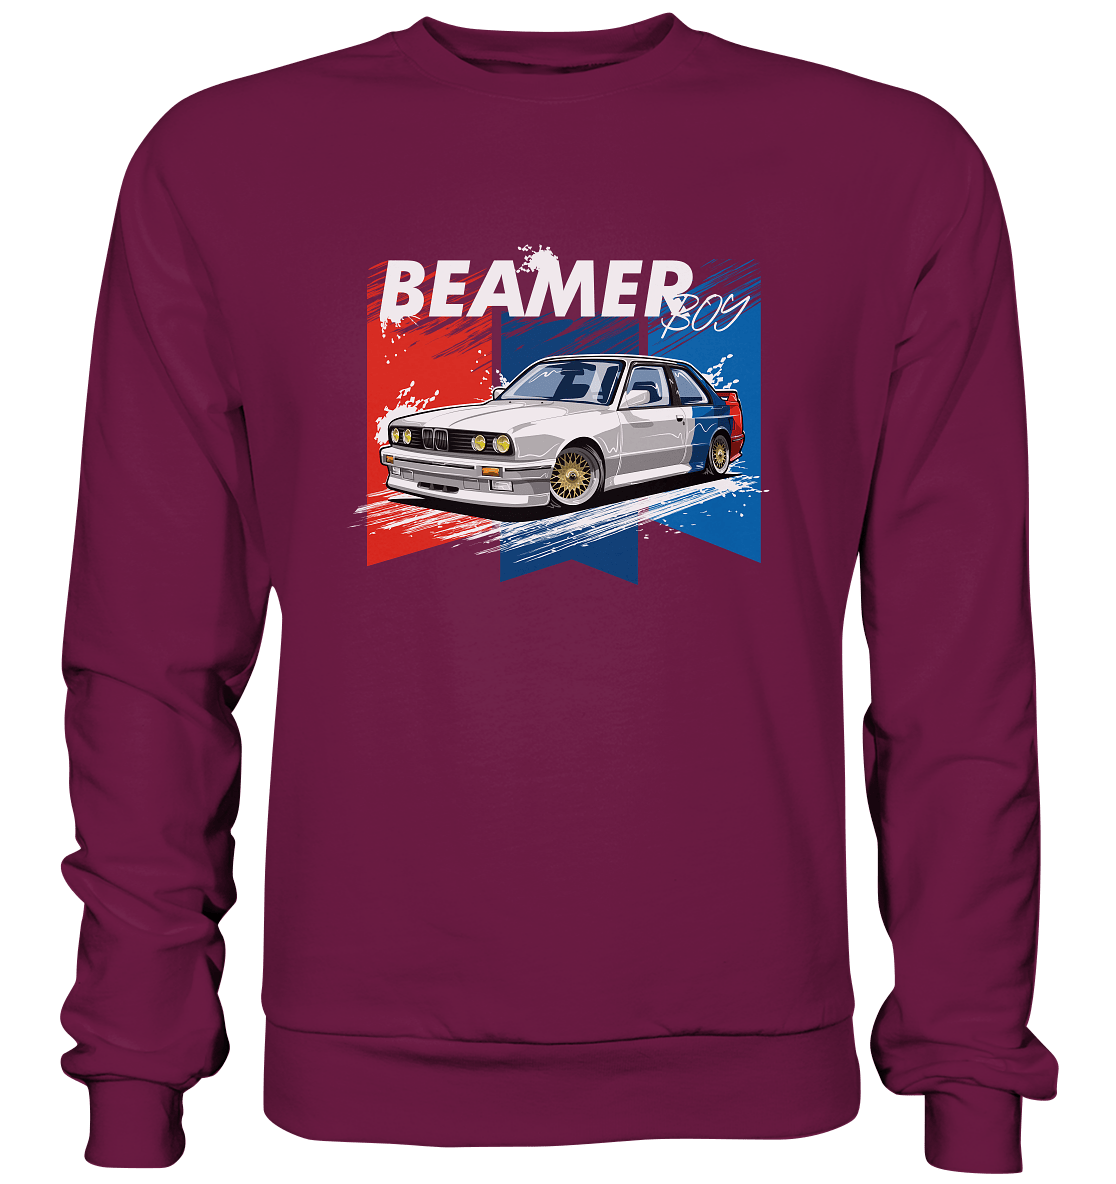 Beamer Boy E30 - Premium Sweatshirt - MotoMerch.de